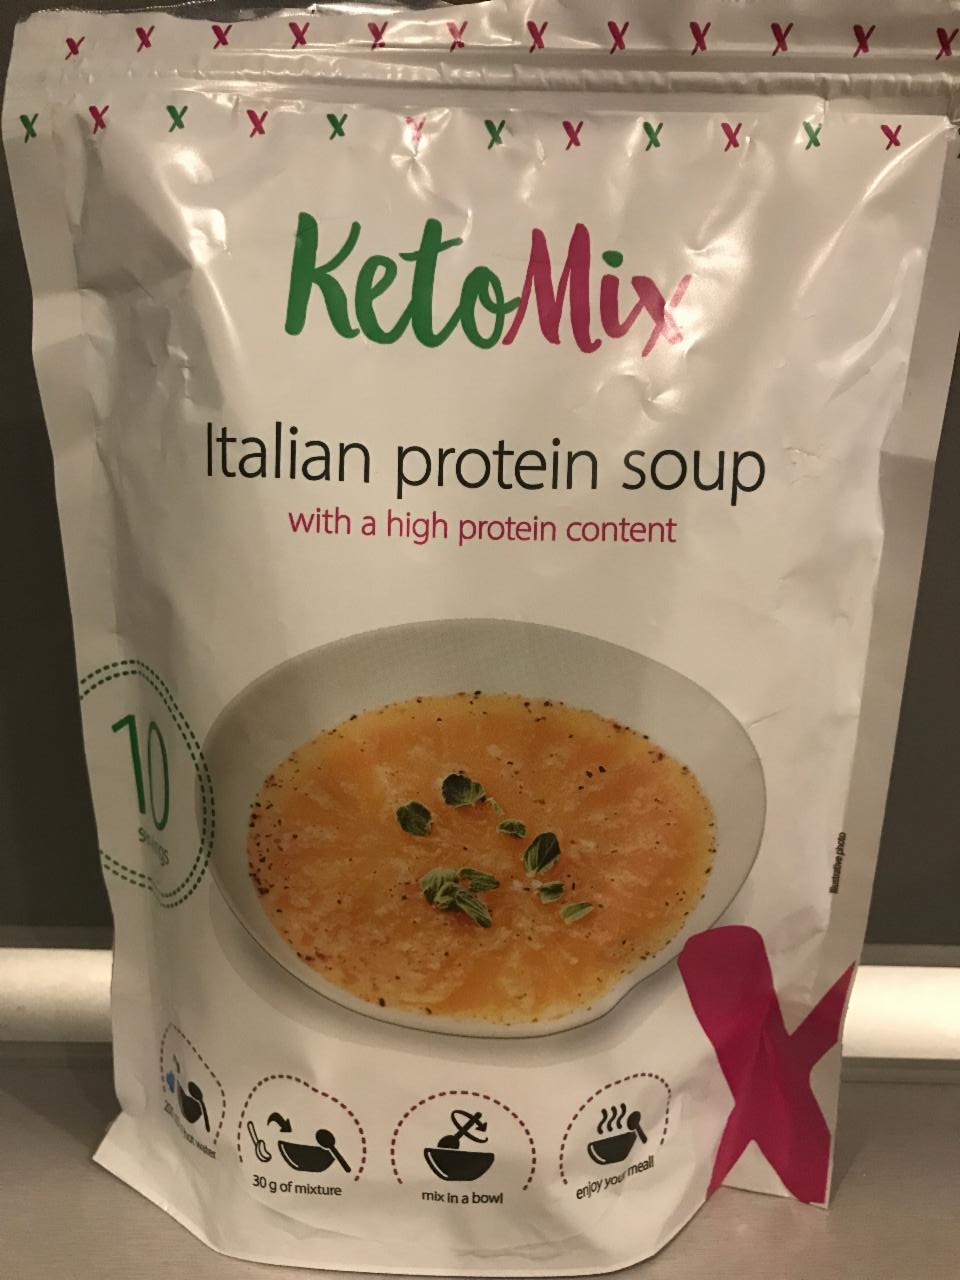 Fotografie - Italian protein soup Ketomix